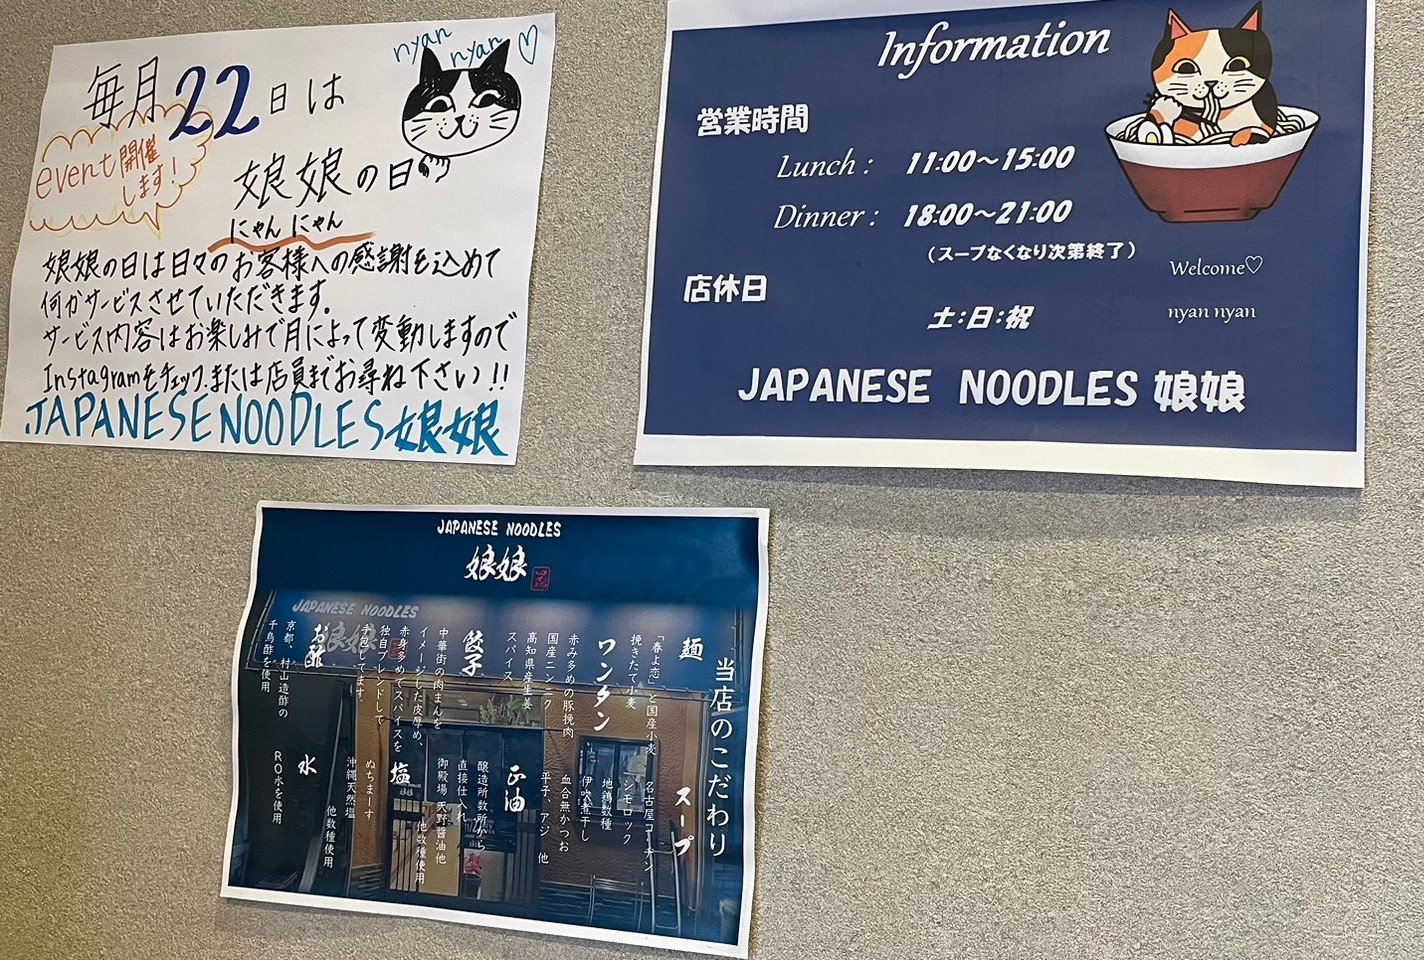 Japanese Noodles 娘娘の日